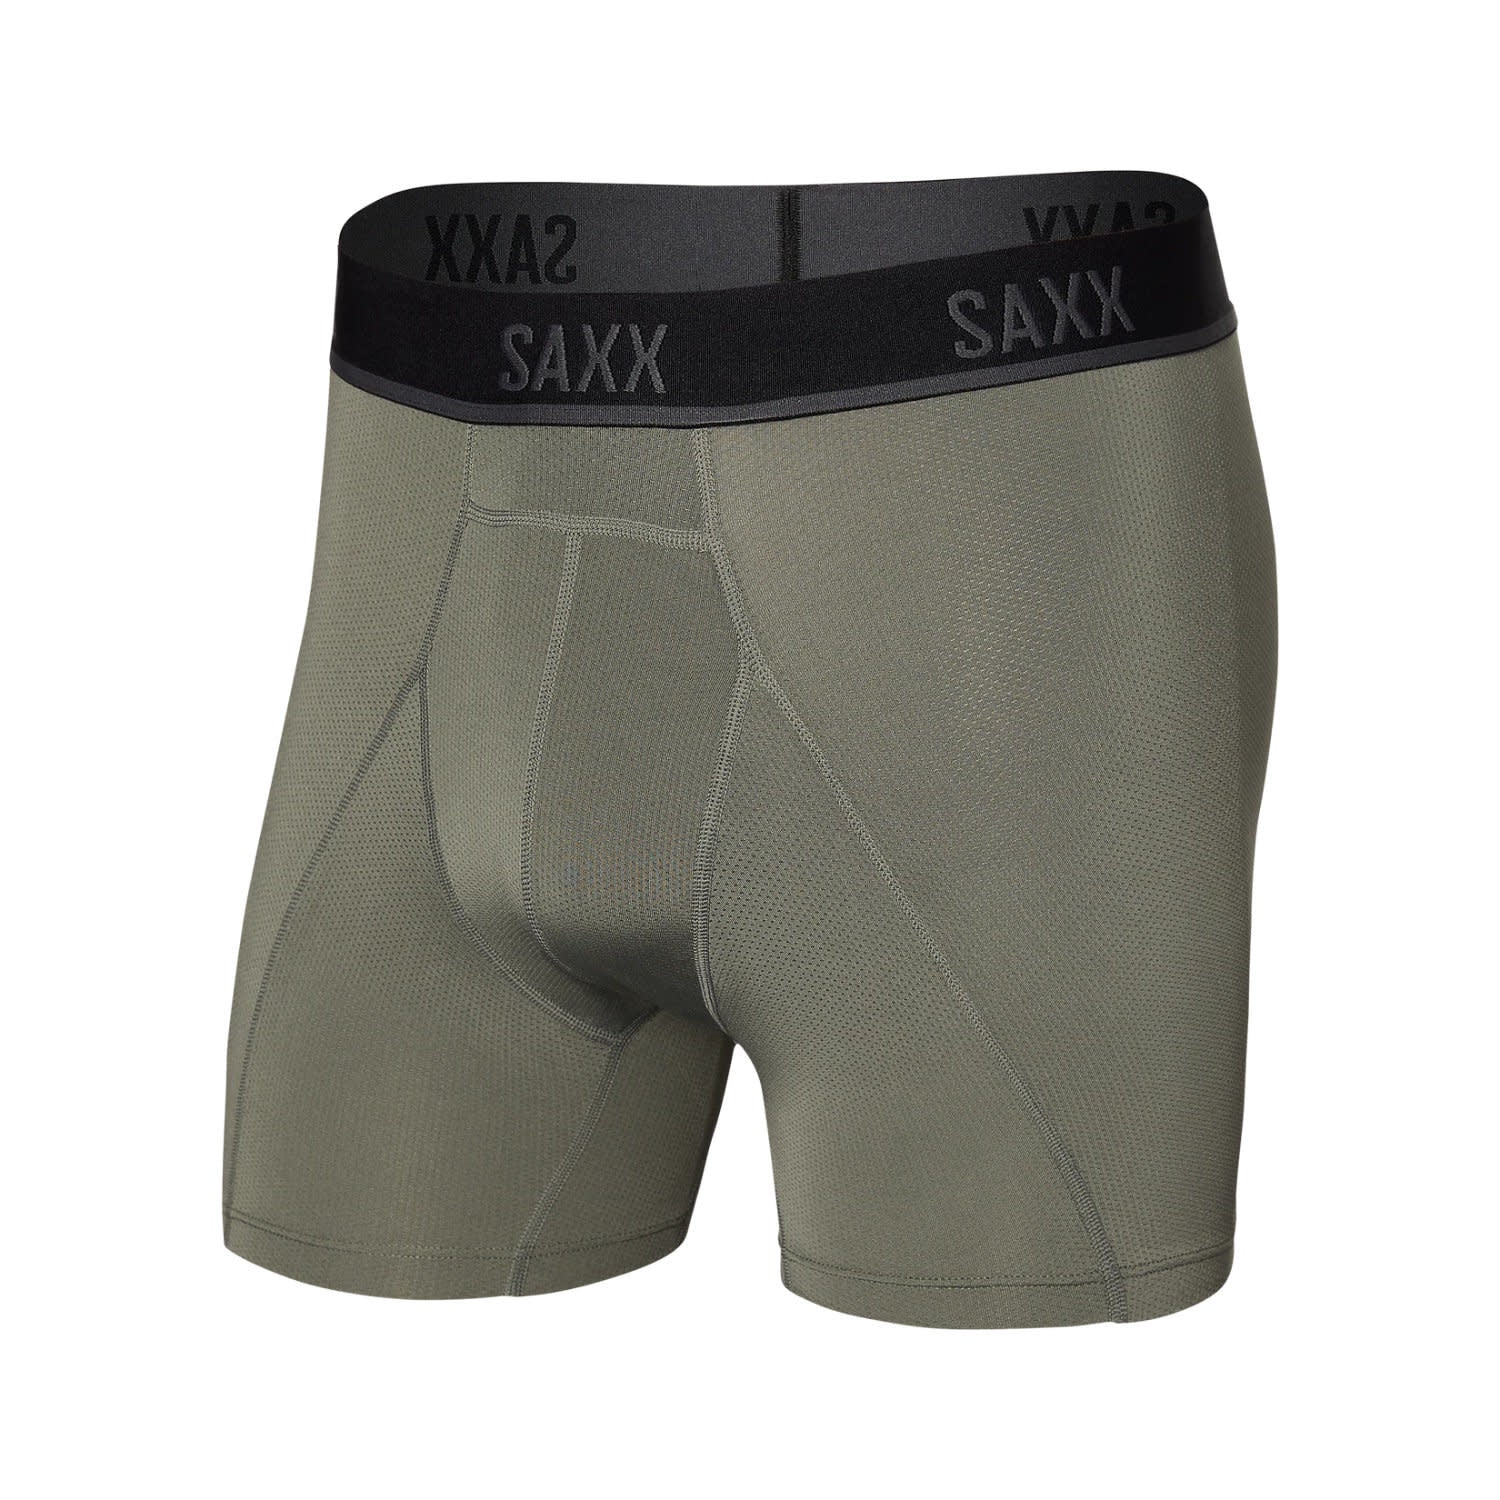 SAXX Kinetic Light Compression Mesh Boxer Brief - Cargo - Grey - 1 - Underwear - Boxer Briefs